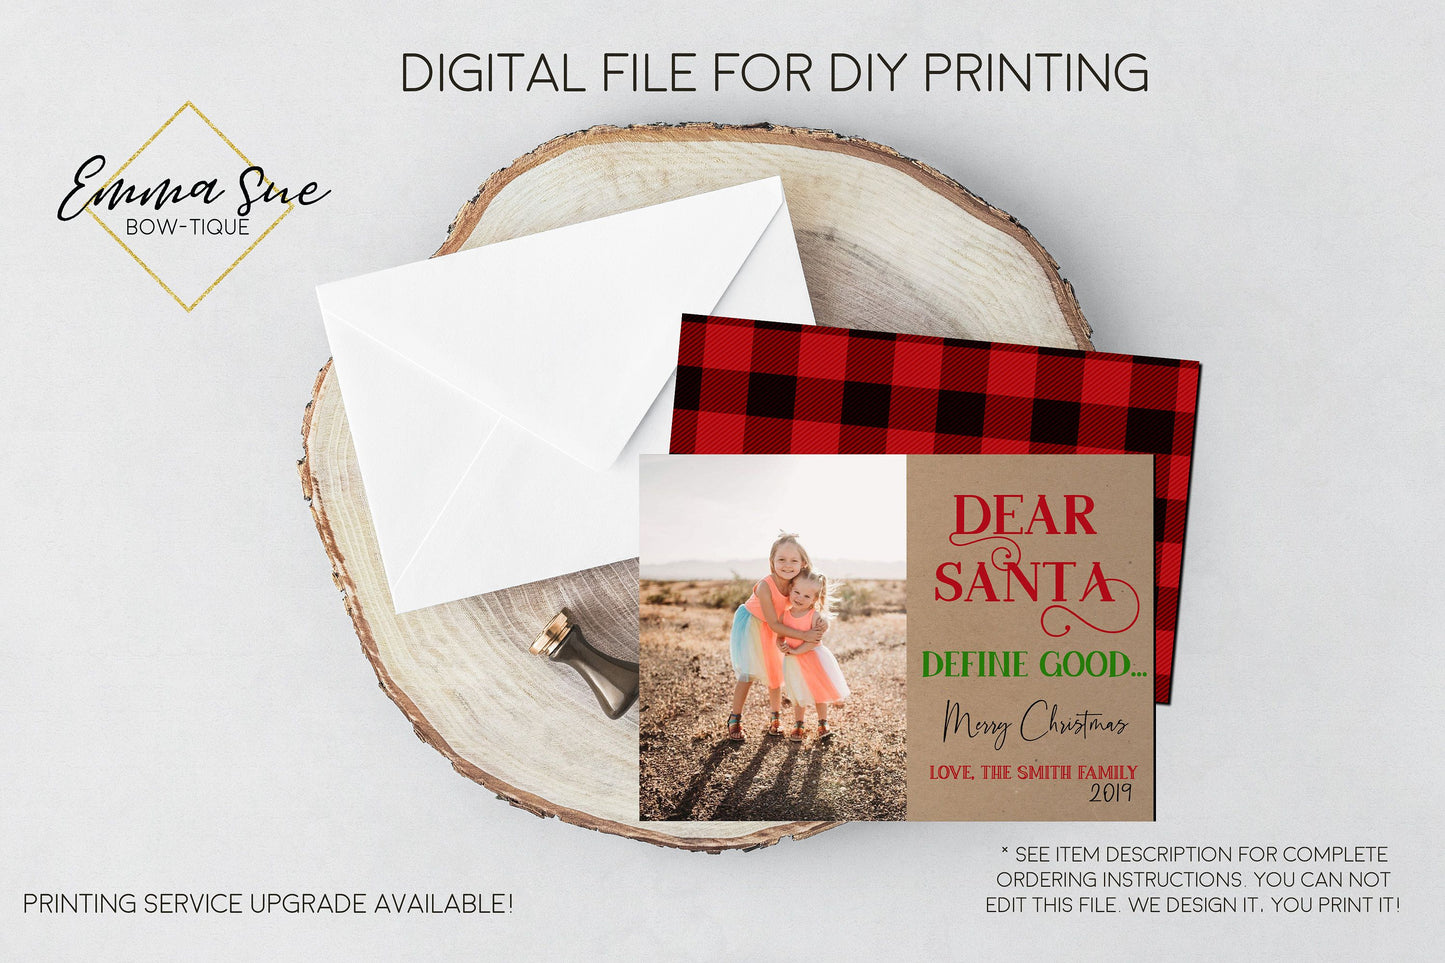 Dear Santa, Define Good - Kid's Christmas Card Kraft paper Plaid Red and Black Buffalo Check  - Family Photo card - Digital File